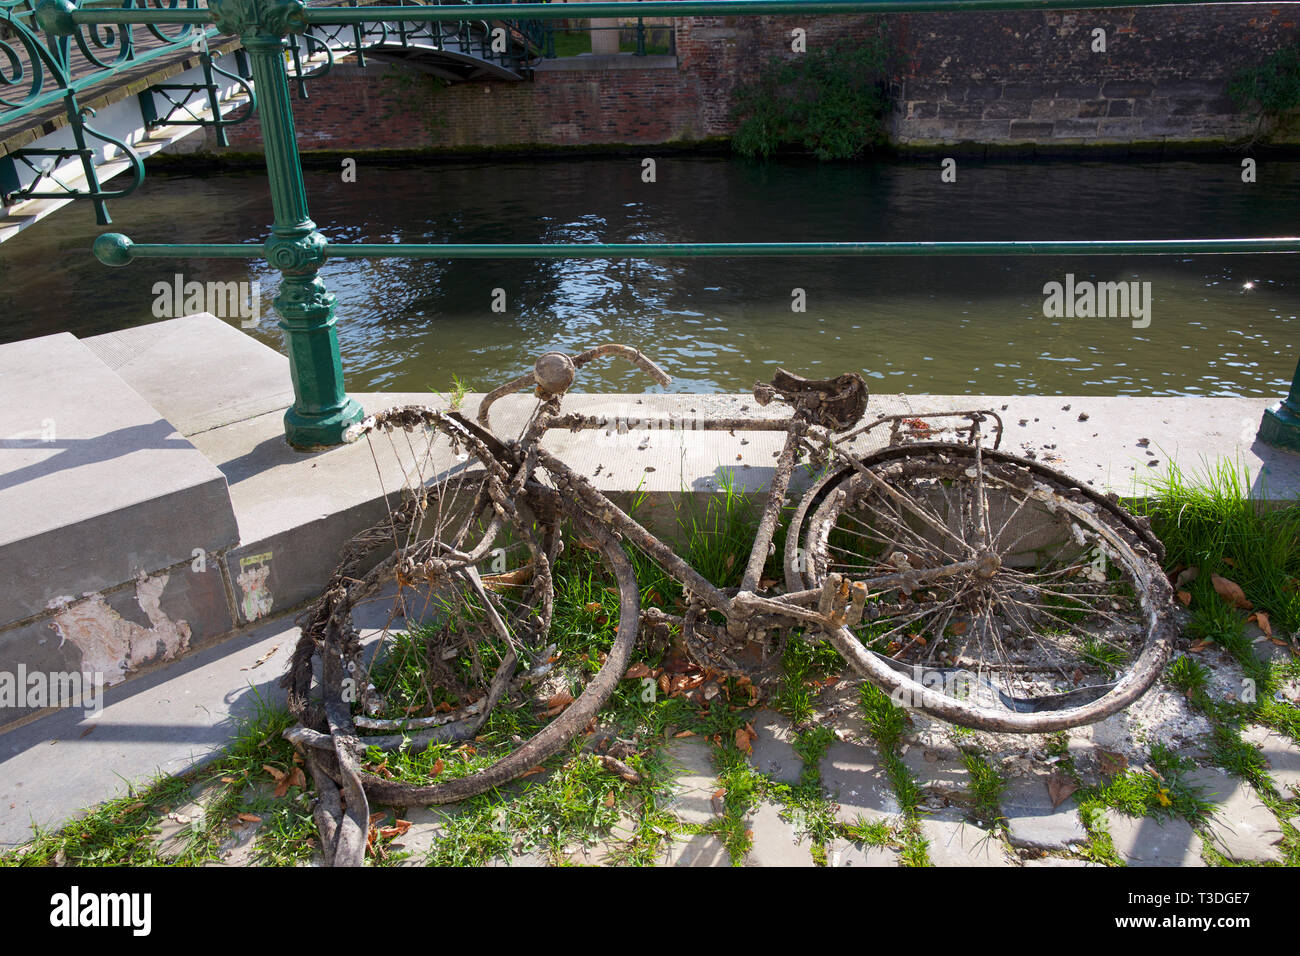 Rusty bike, dragués du fleuve, Gand, Belgique Banque D'Images